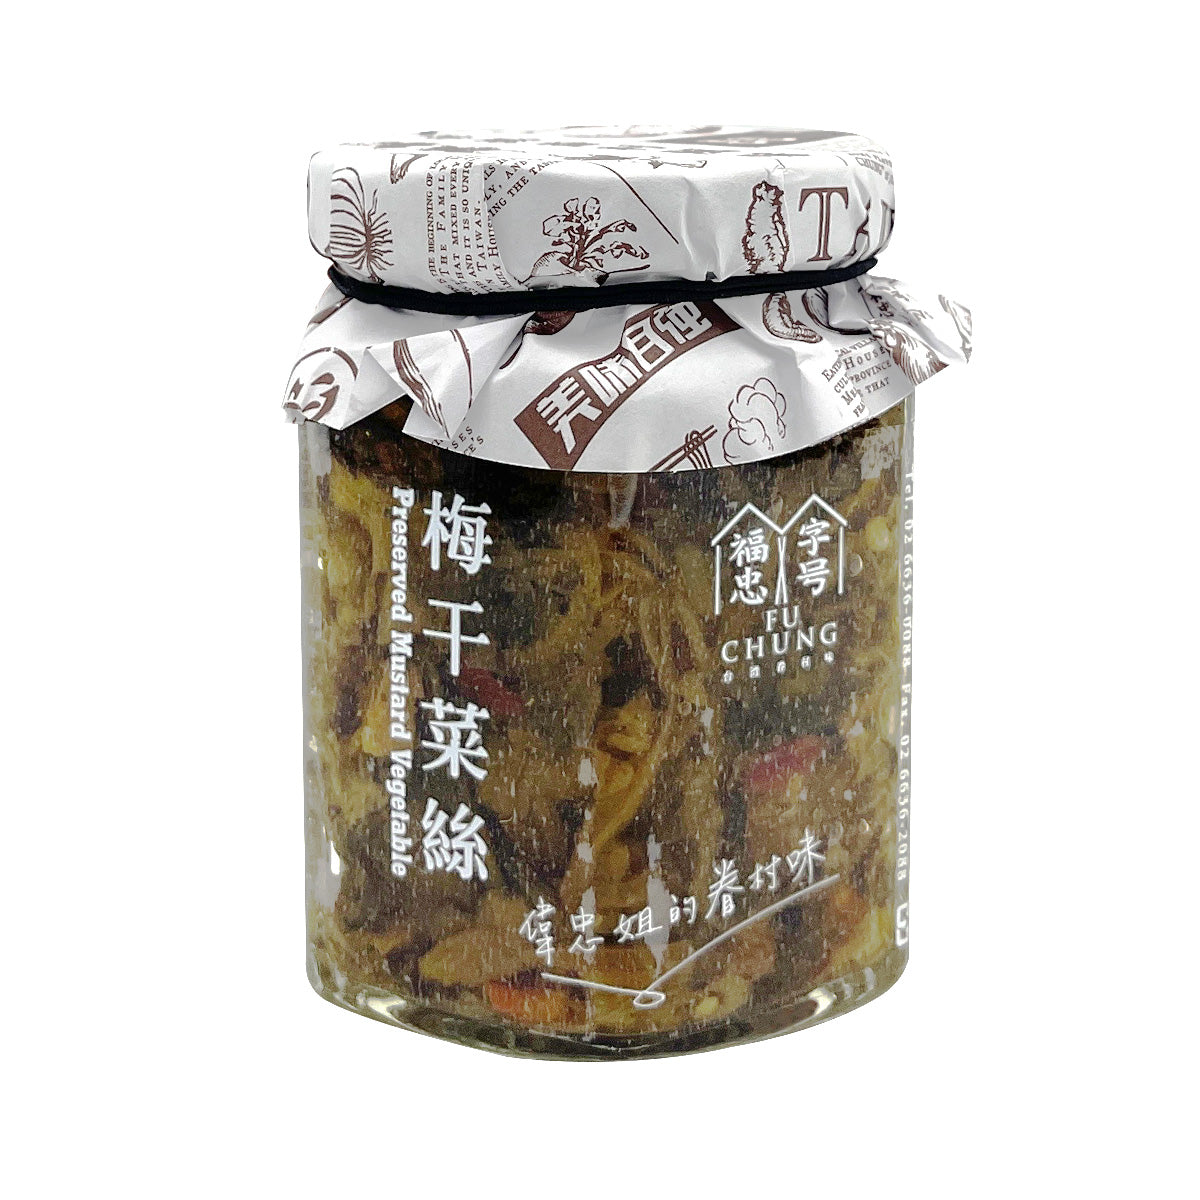 【FU CHUNG】Preserved Mustard Vegetable 180g